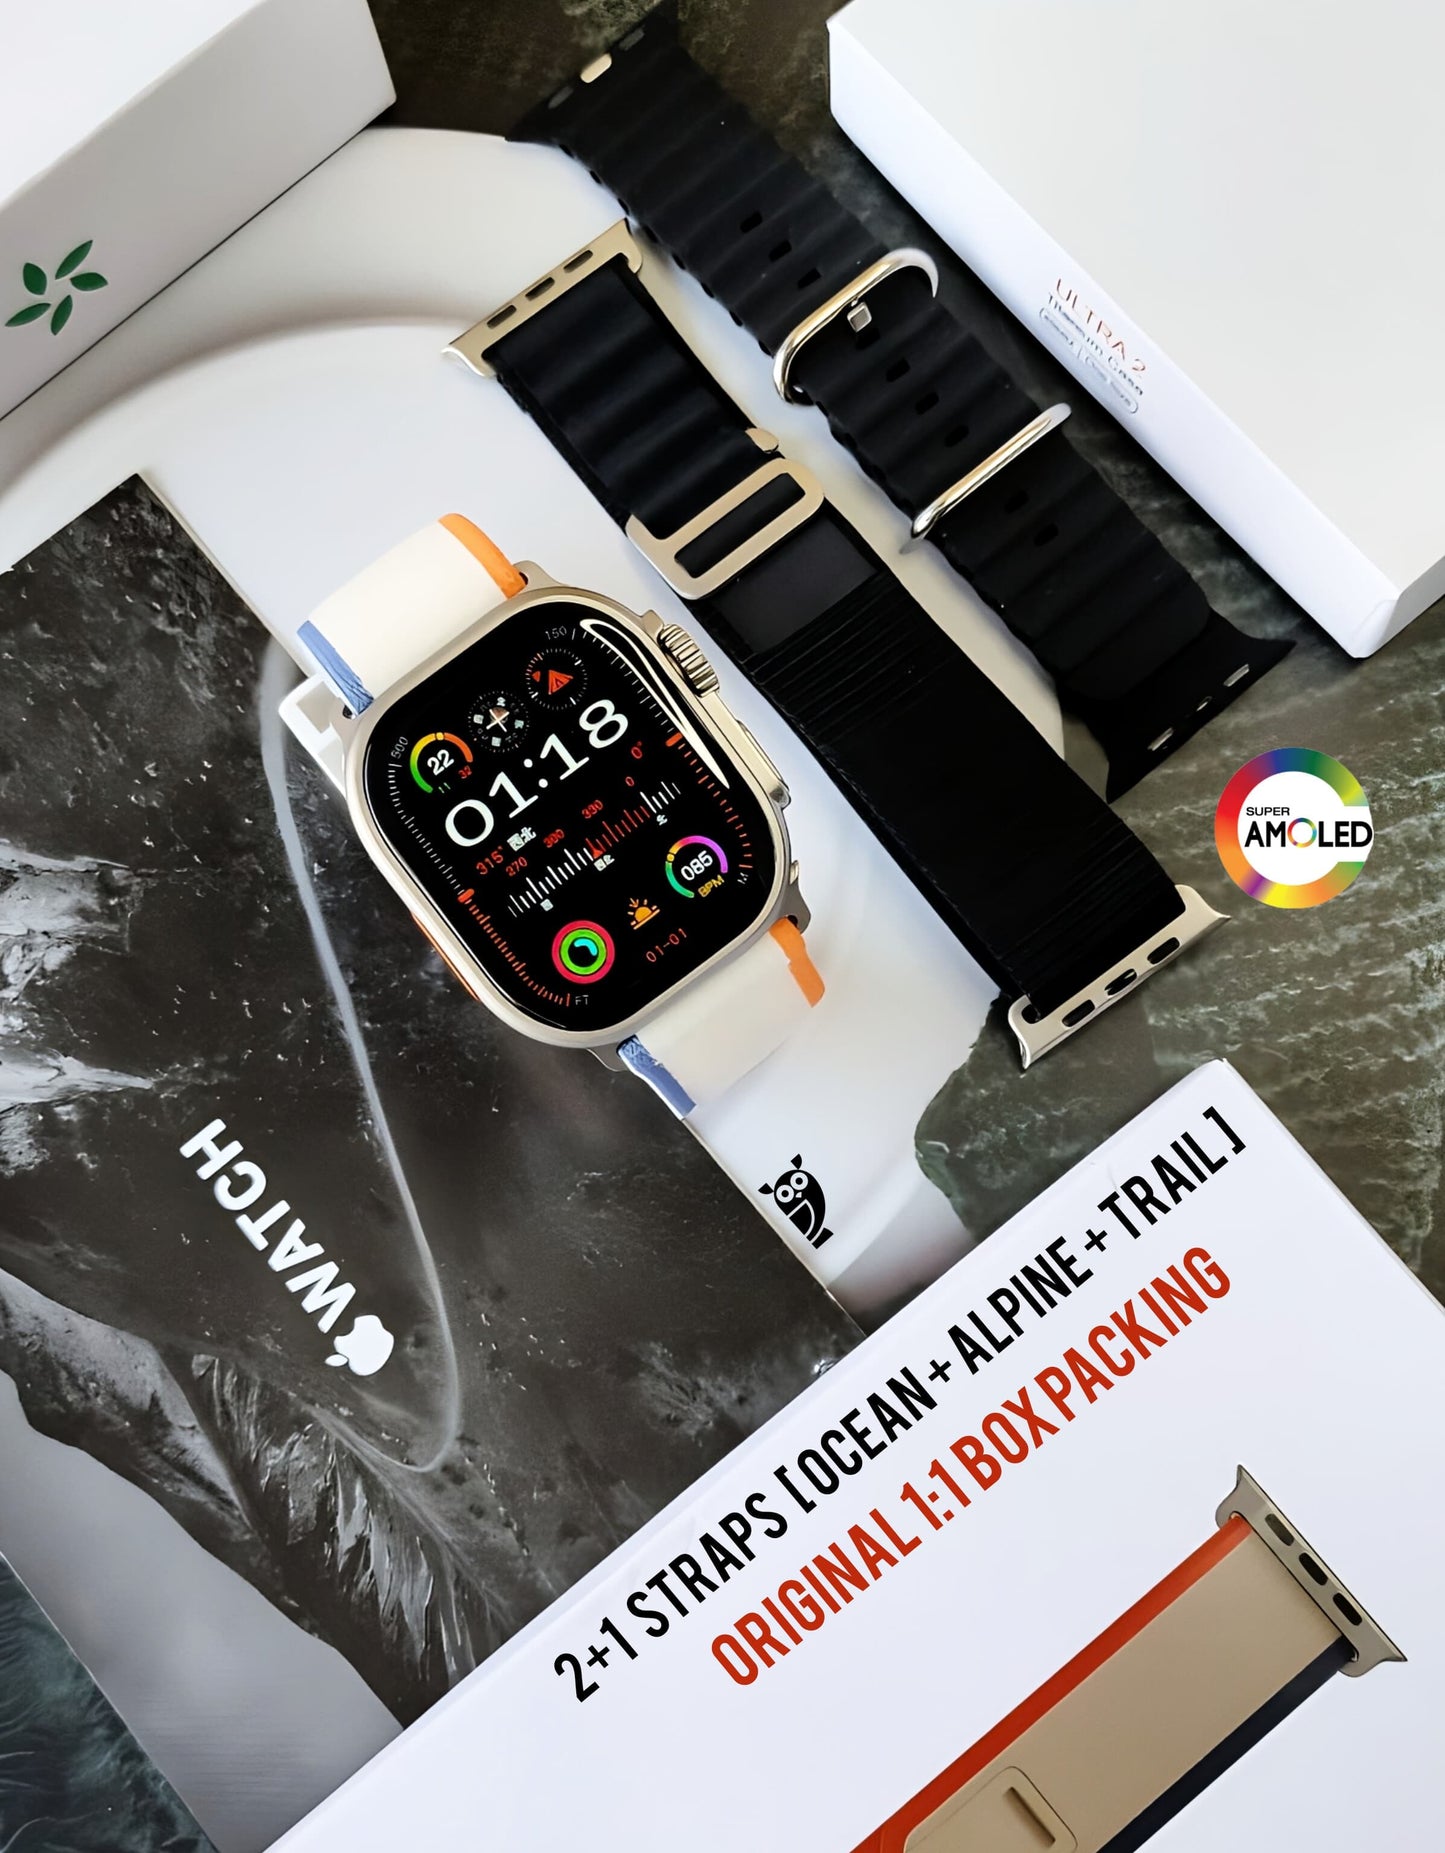 Apple watch Ultra 2 clone with Oled display, titanium like metal finish